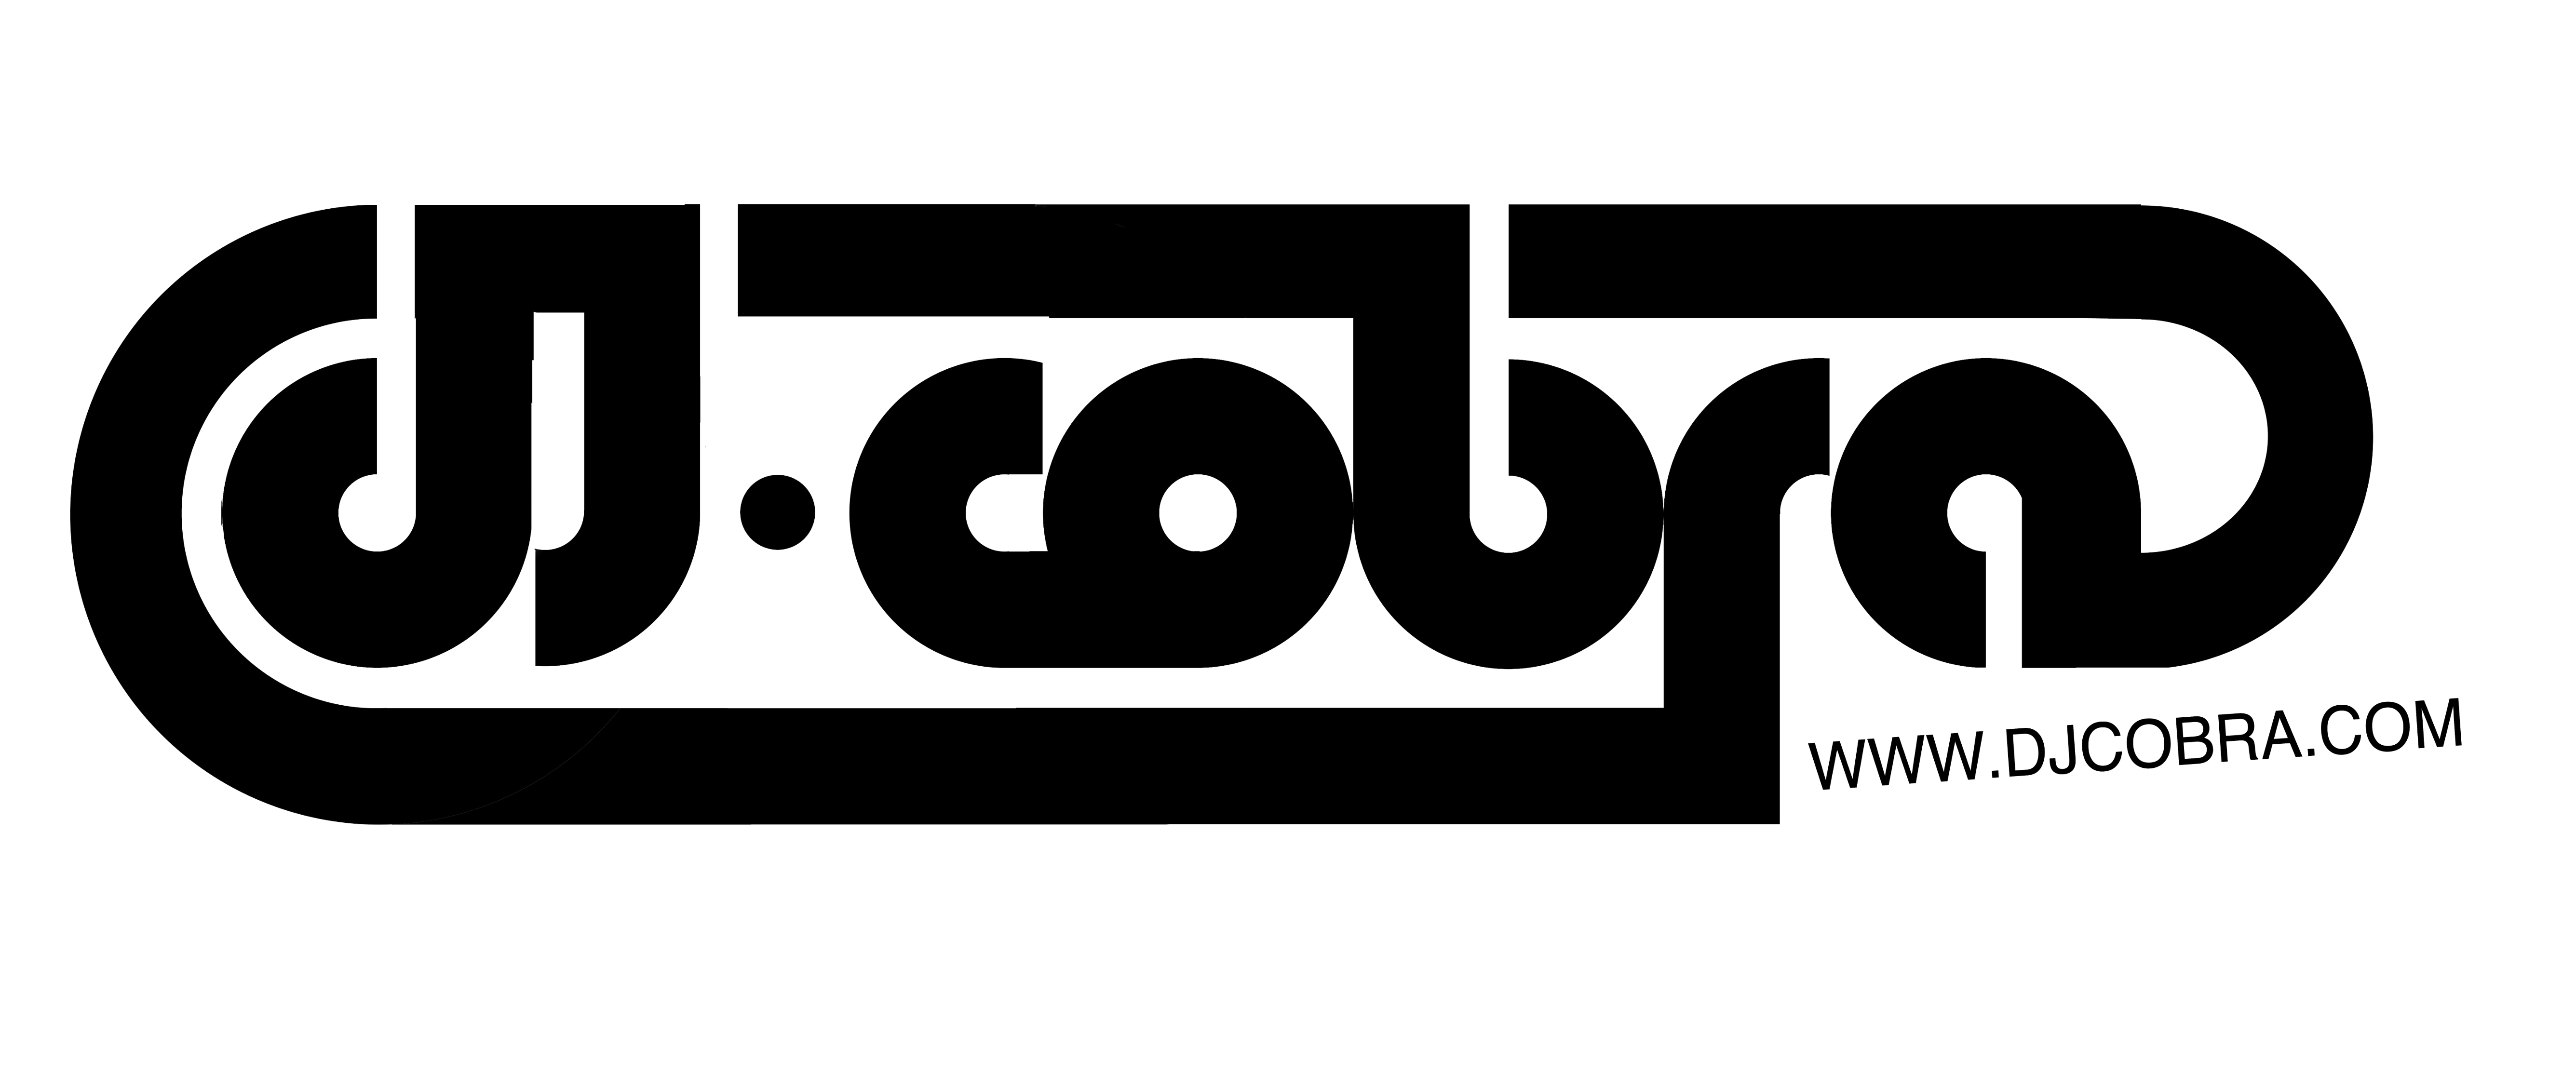 File:DJ Cobra Logo.png - Wikimedia Commons